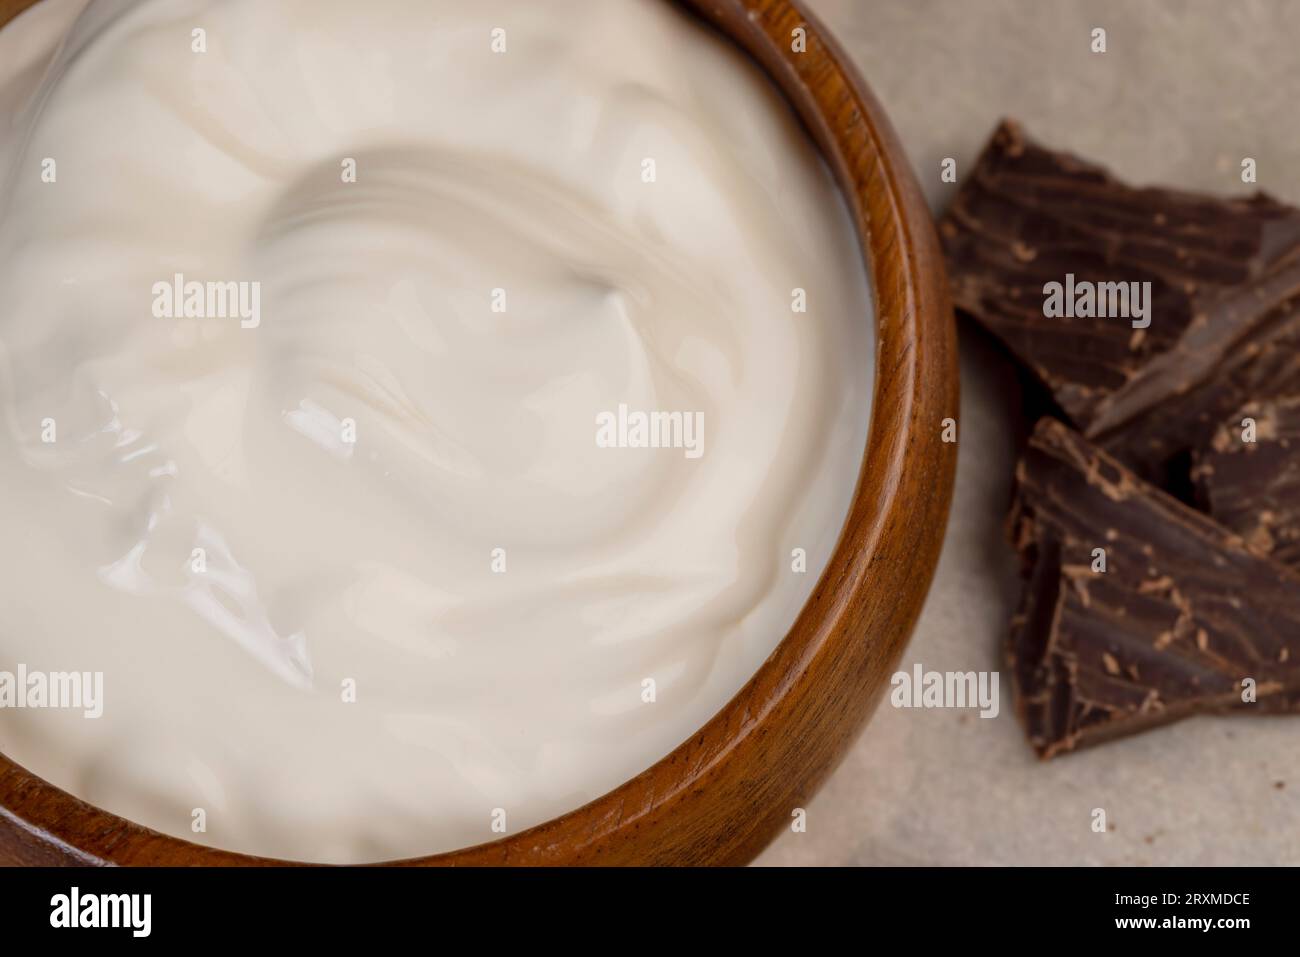 Creamy yogurt with chocolate close-up, milk yogurt from cow's milk with chocolate pieces from cocoa Stock Photo